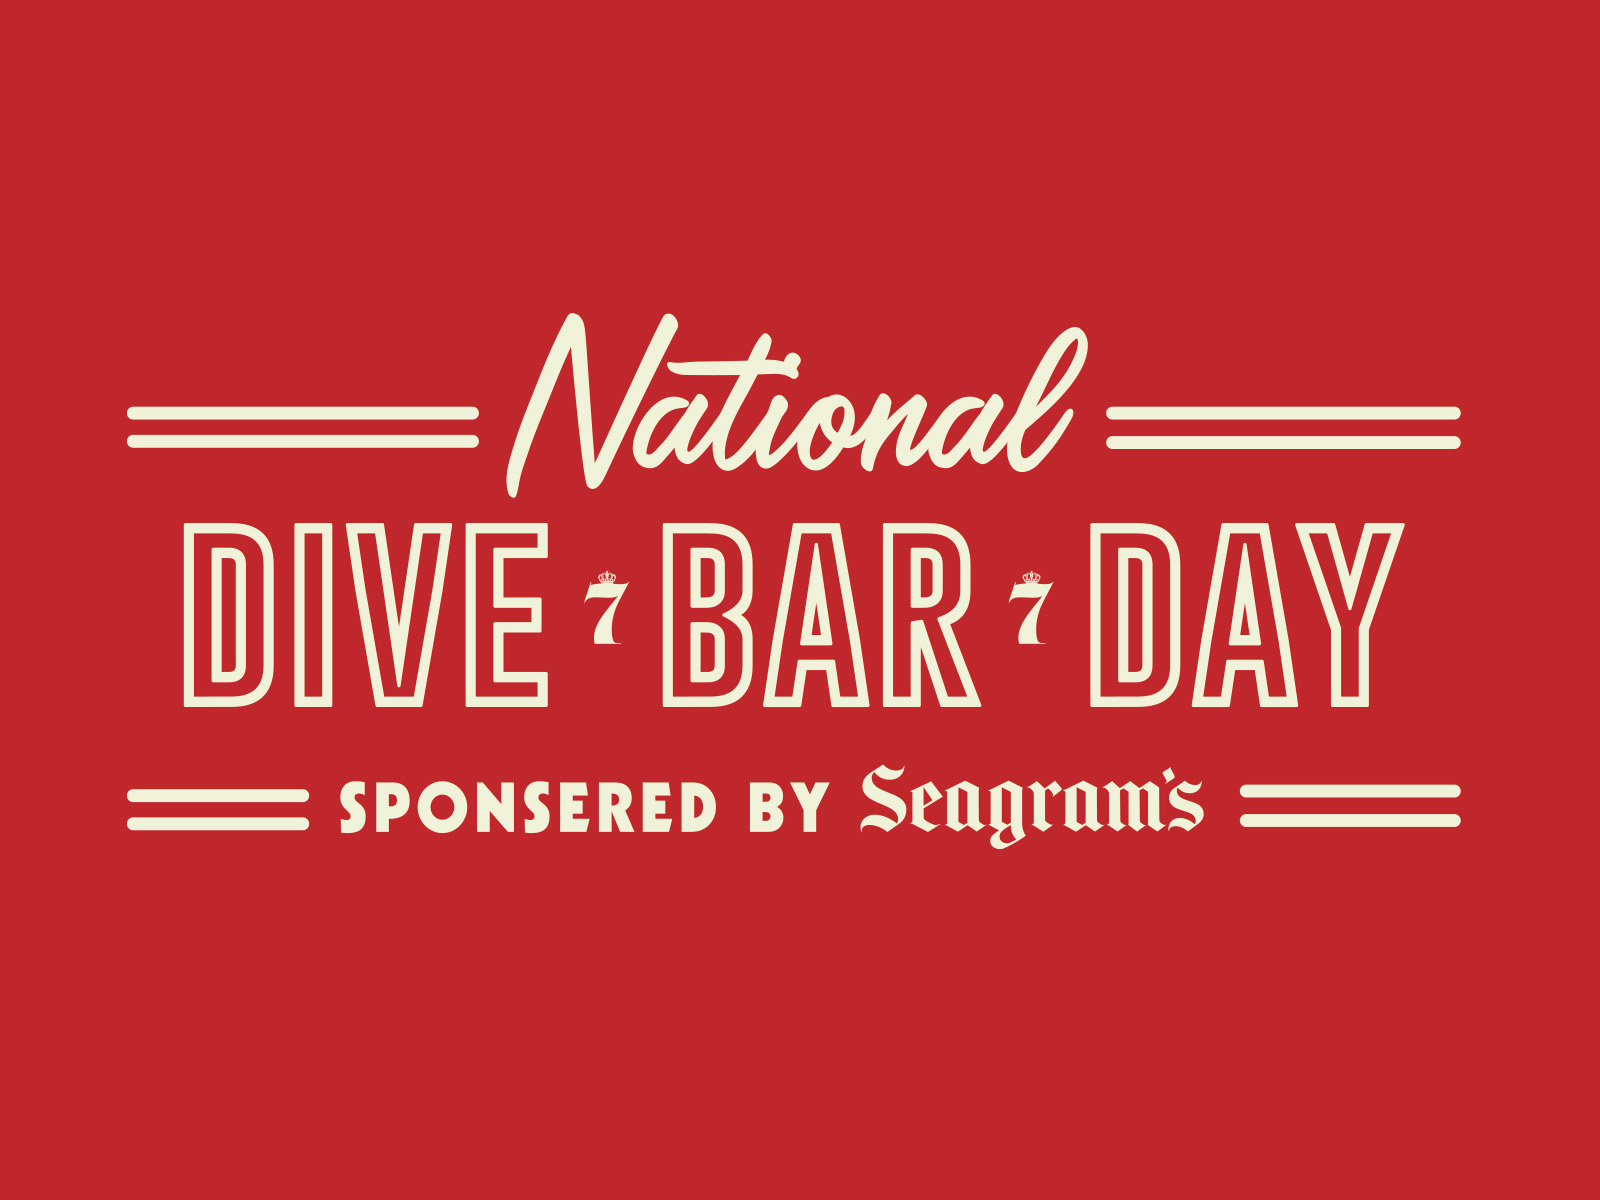 Seagram's National Dive Bar Day by Rachel Botts Schoenholz on Dribbble